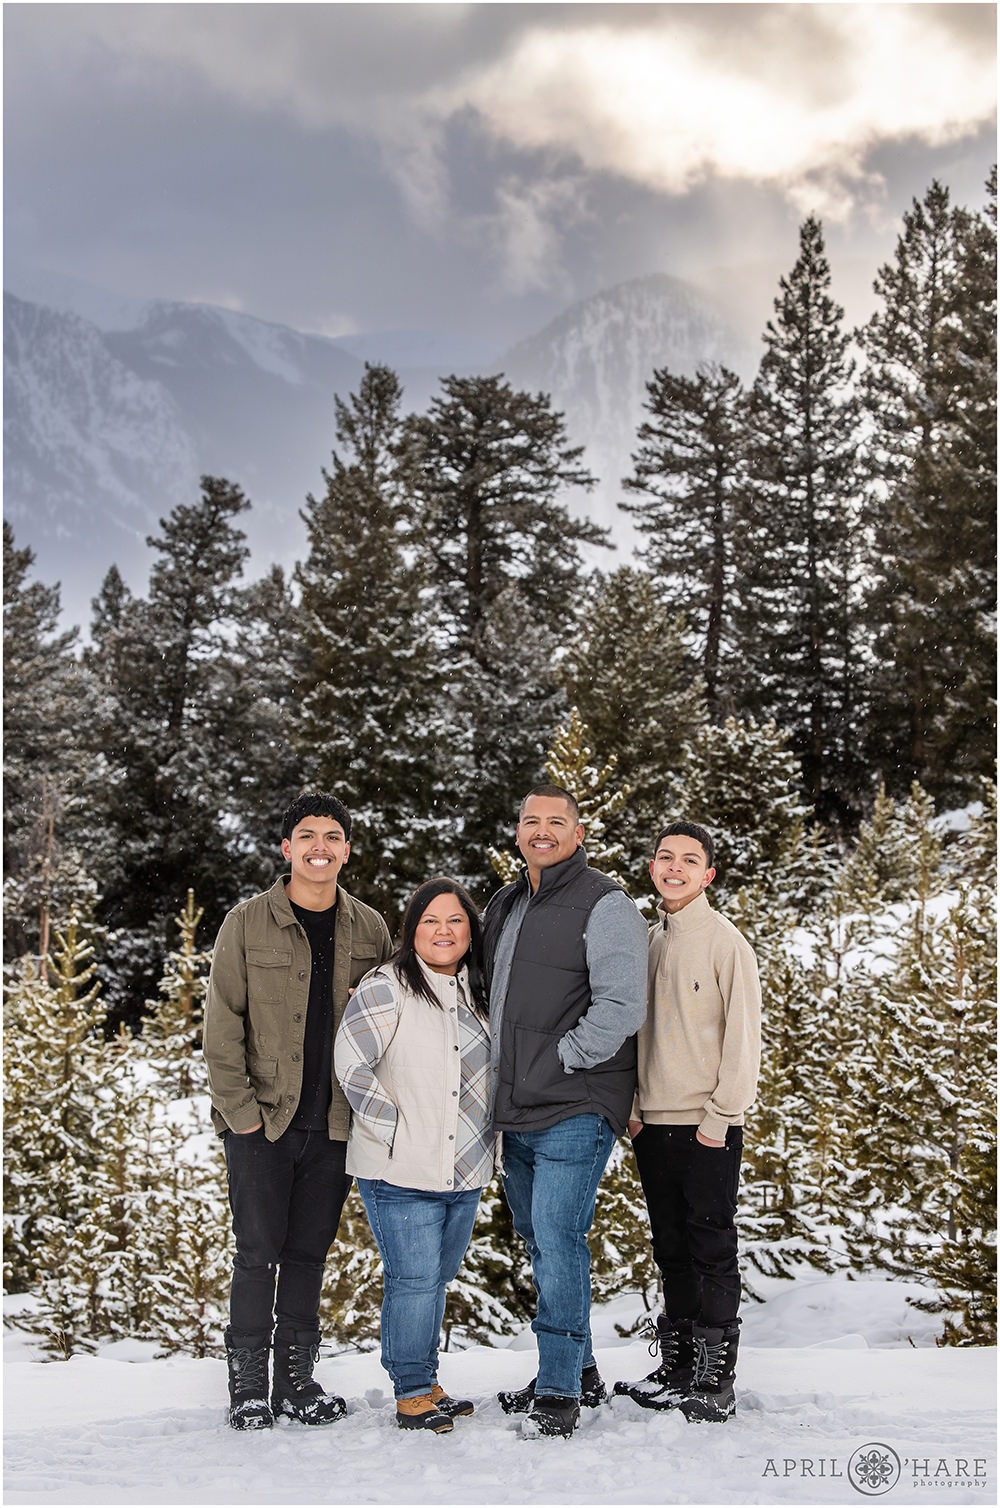 Gorgeous Colorado Mountain Family Photo in the Snow During Winter